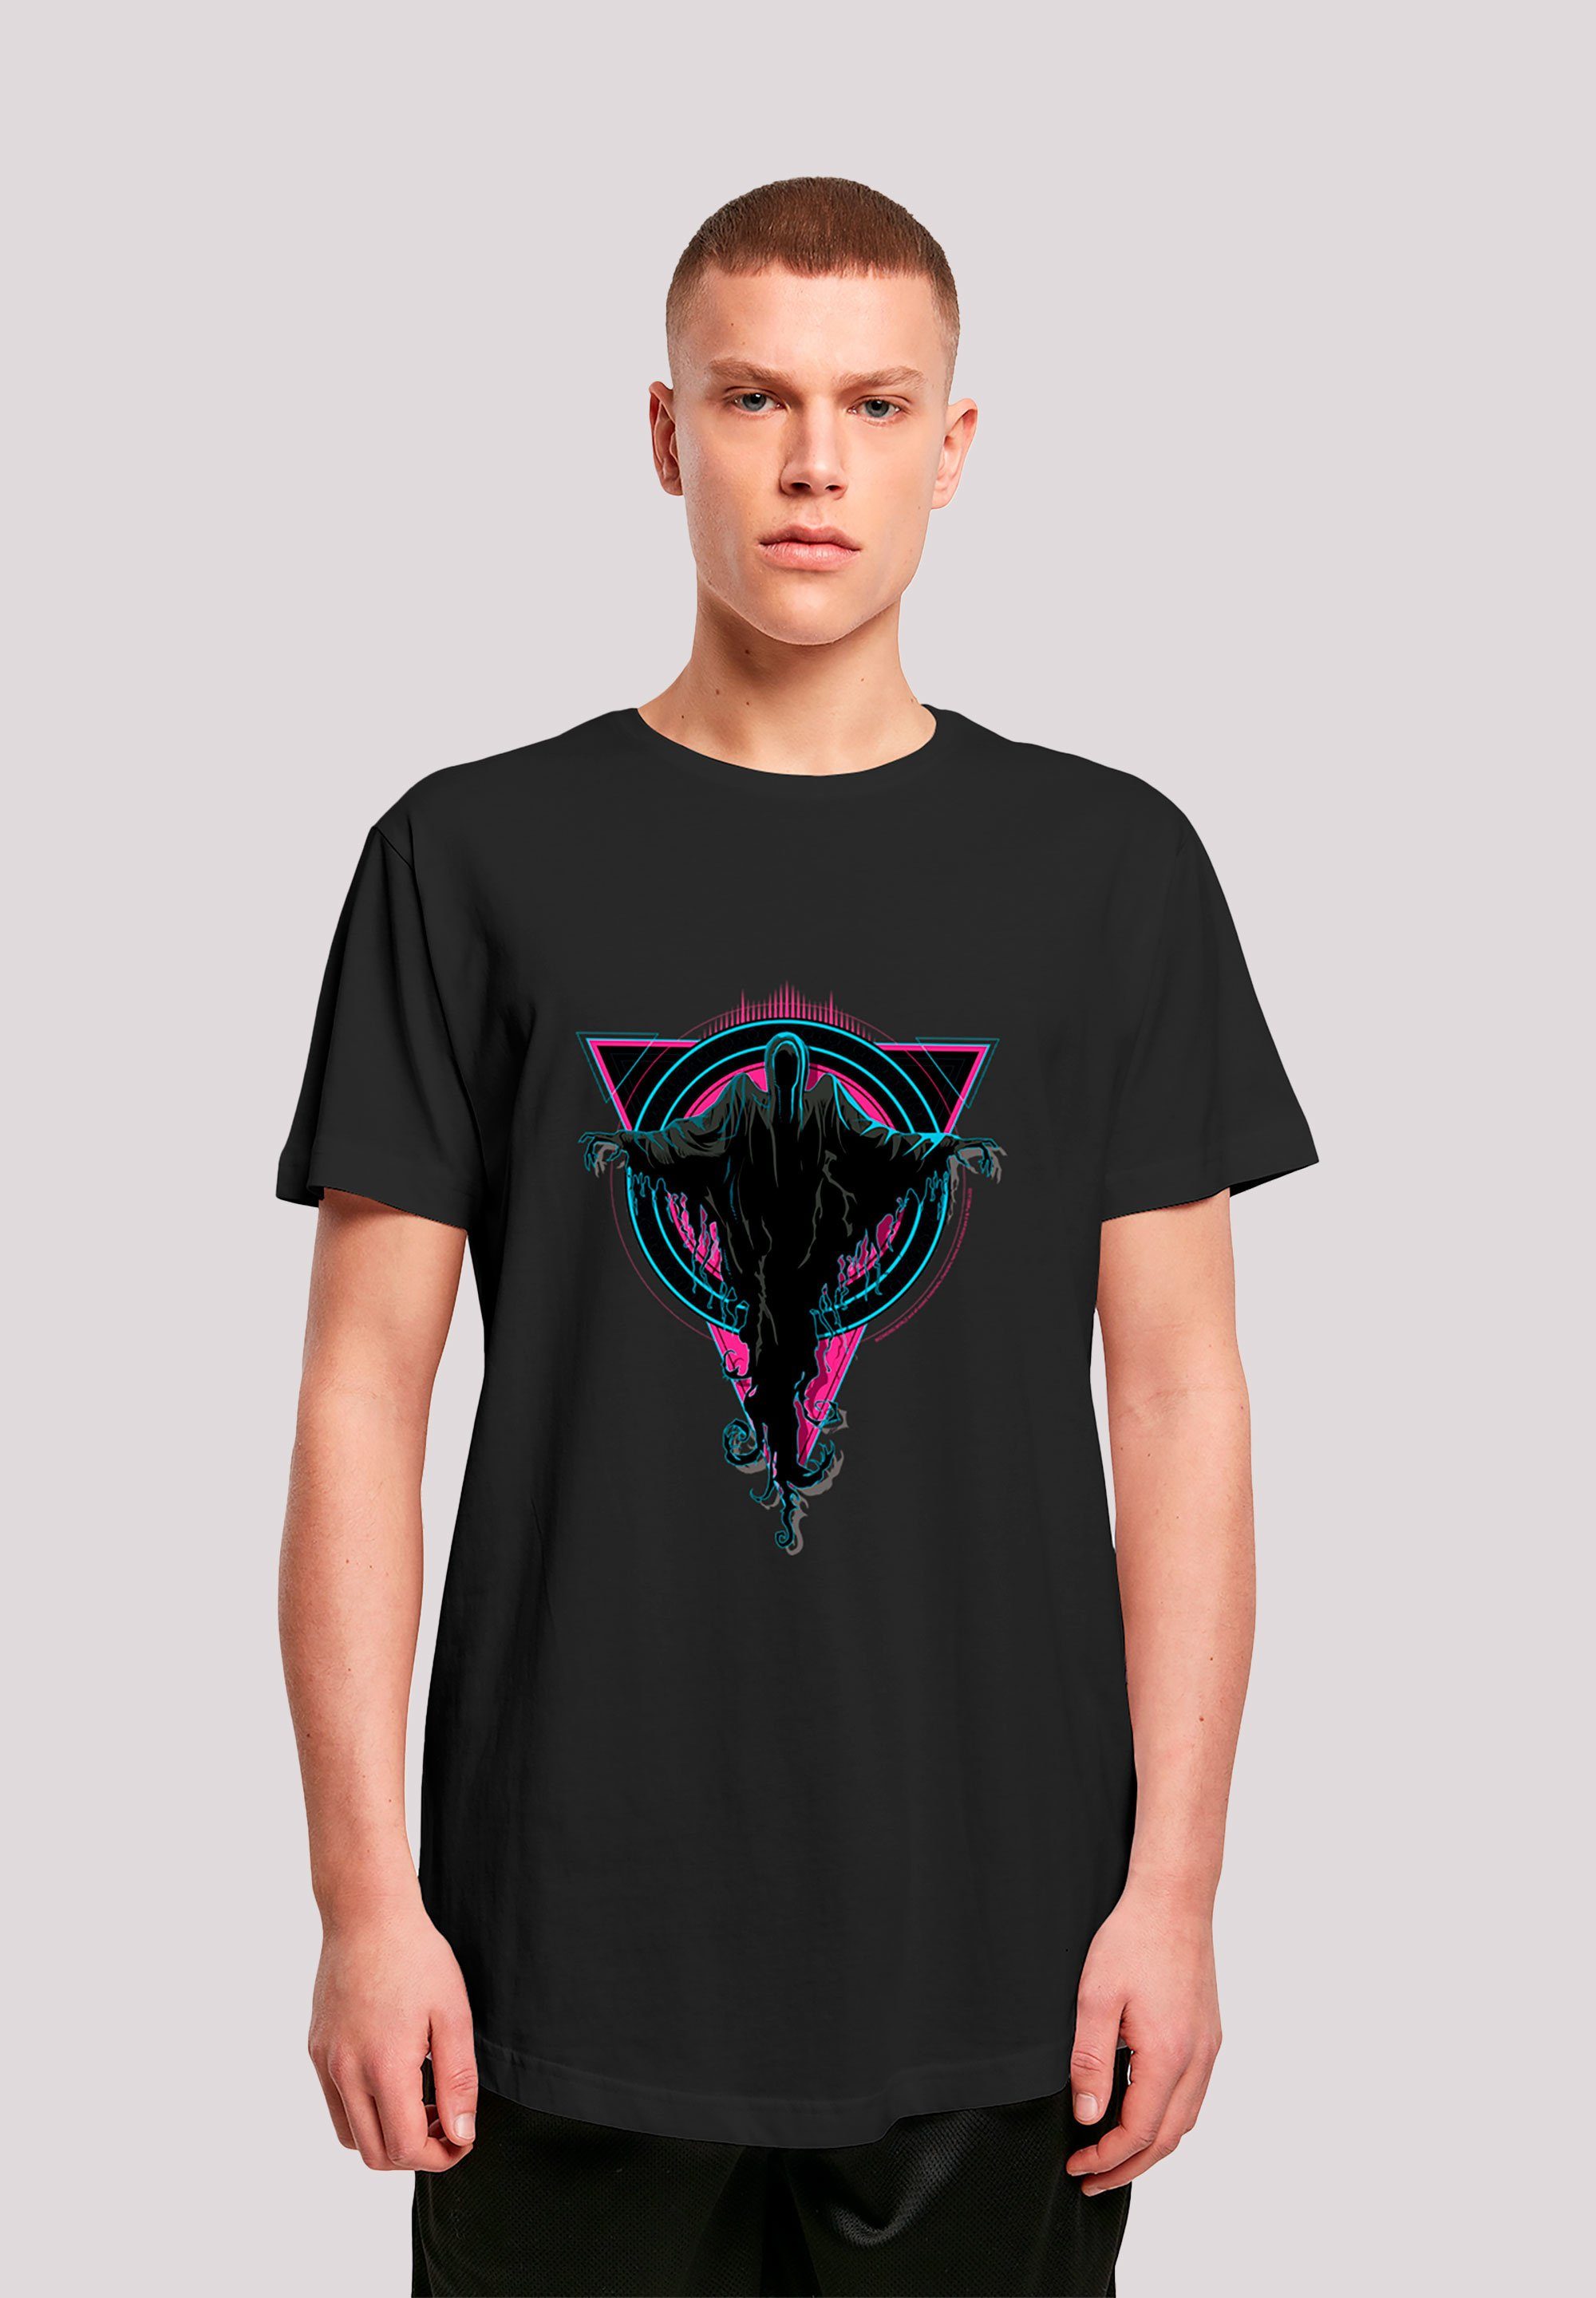 F4NT4STIC Neon T-Shirt Potter Print Harry Dementor